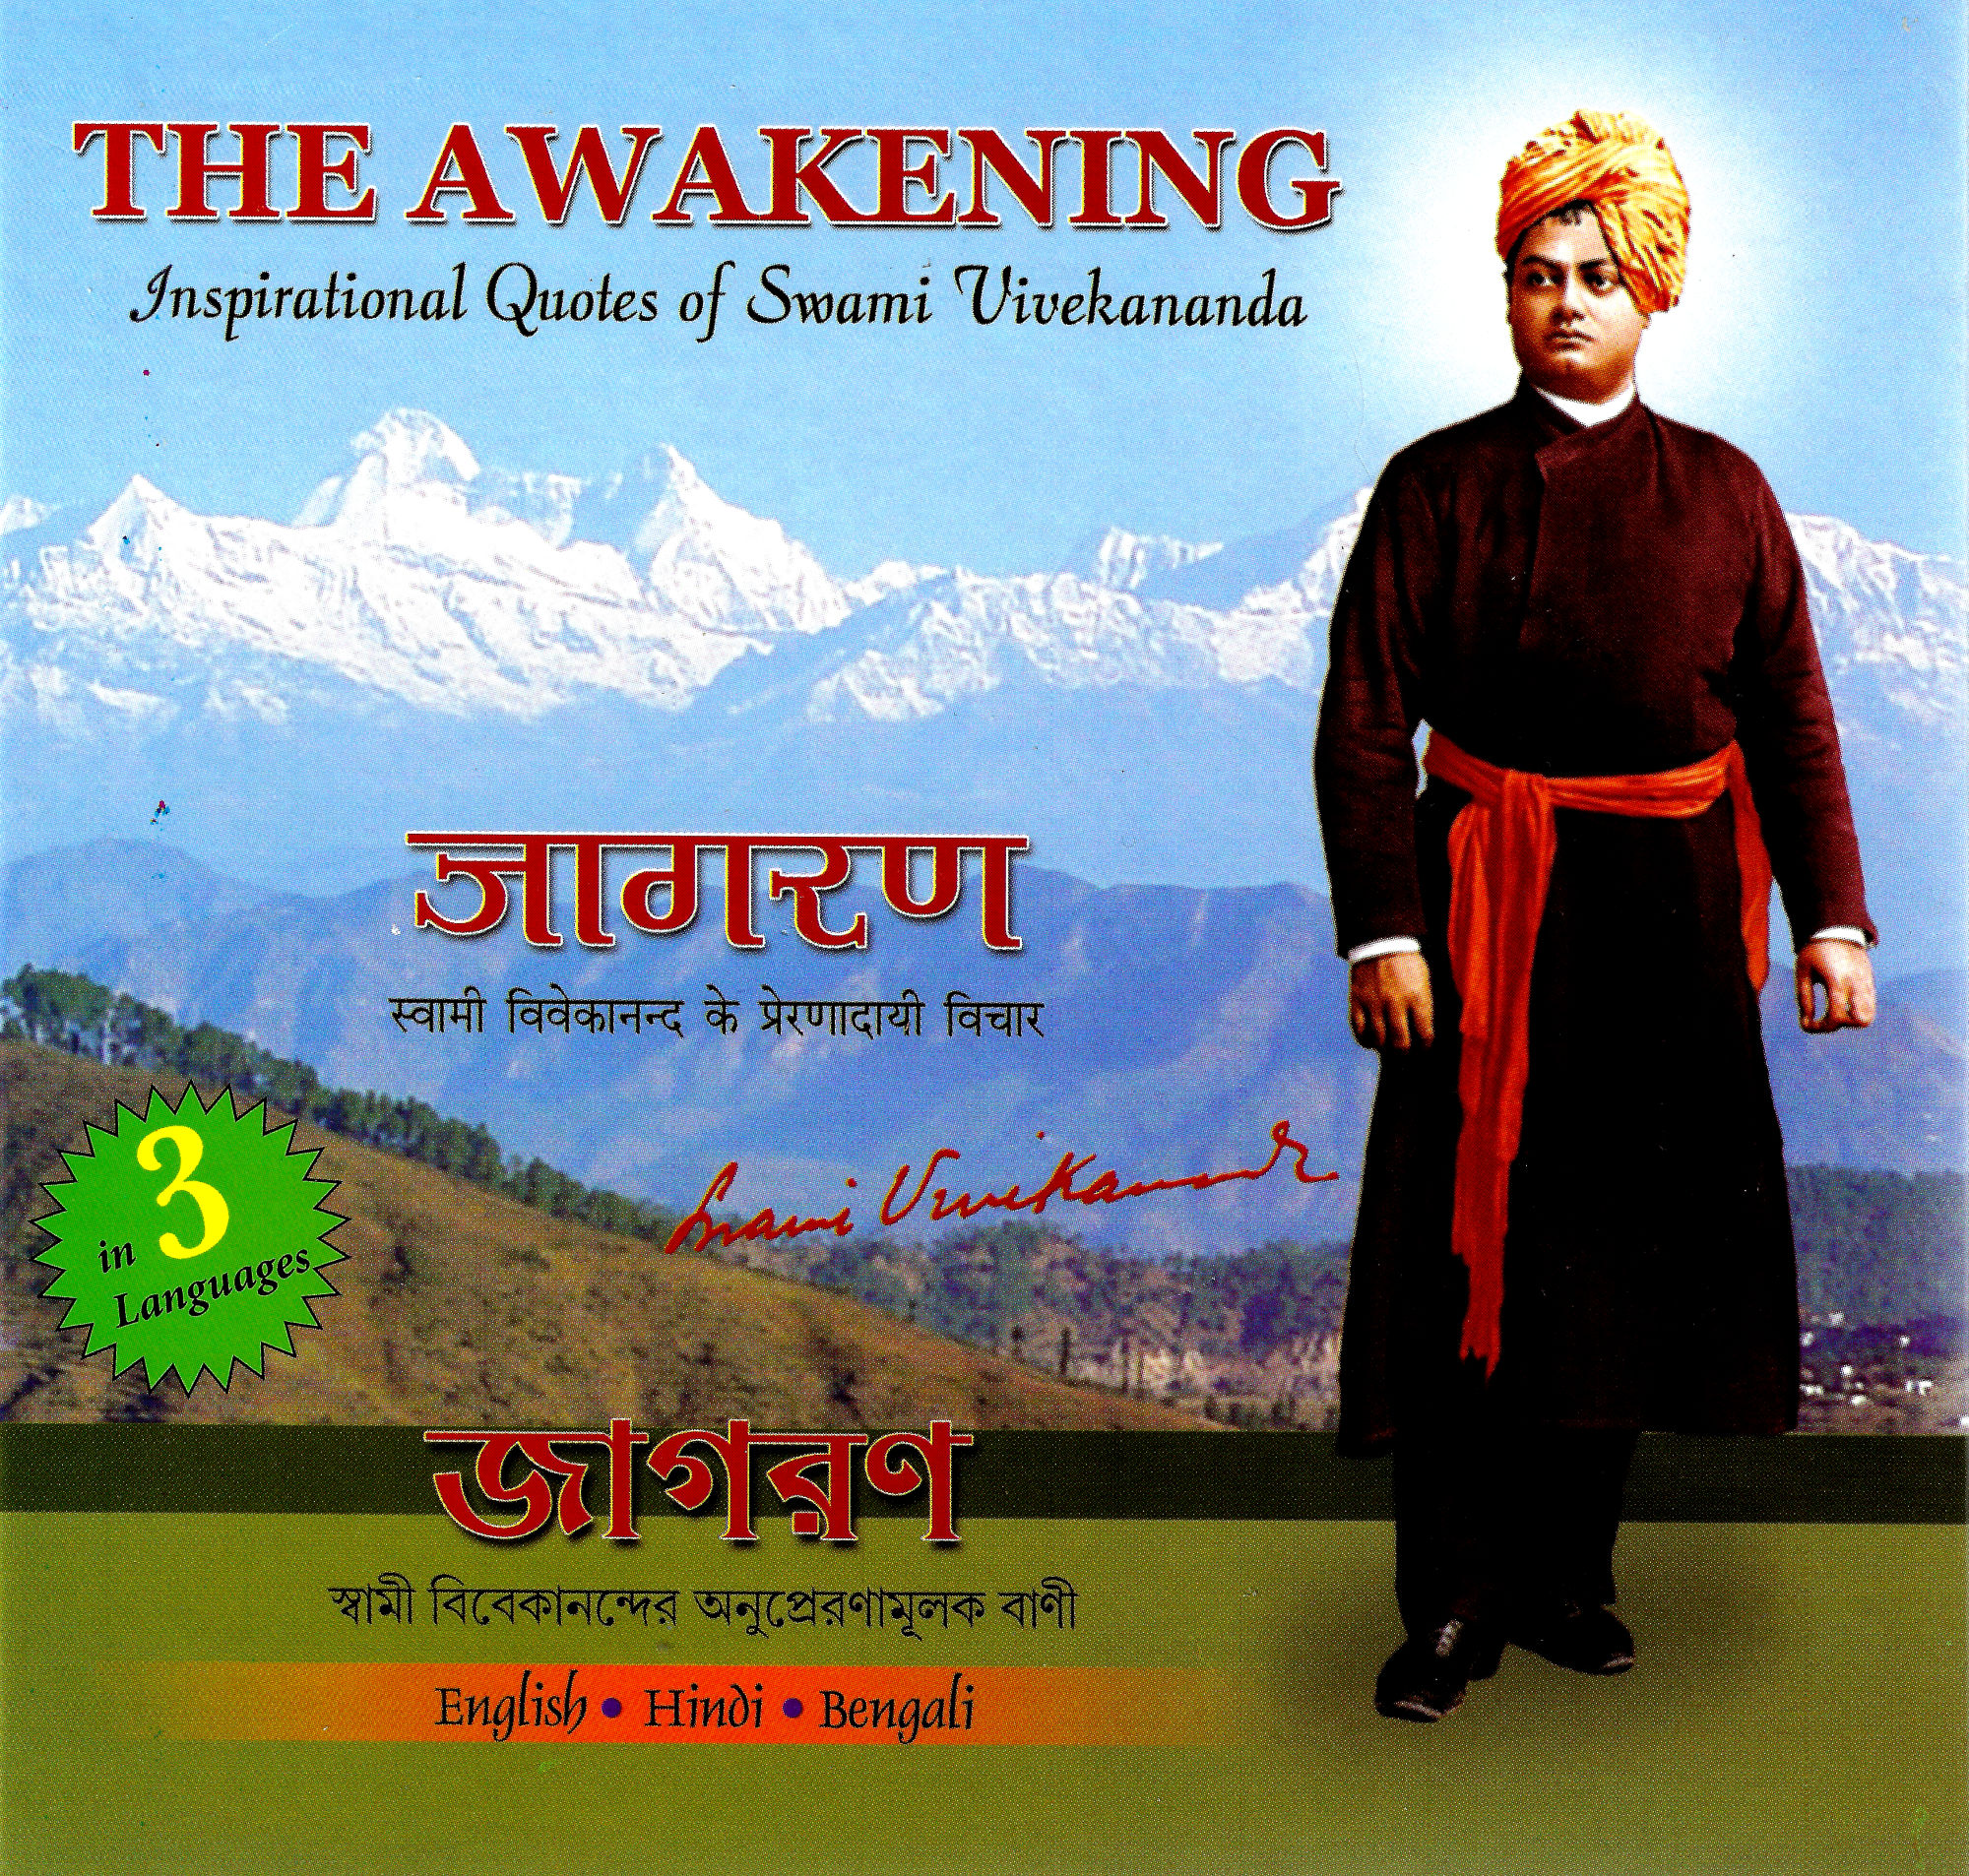 The Awakening - Inspirational Quotes of Swami Vivekananda